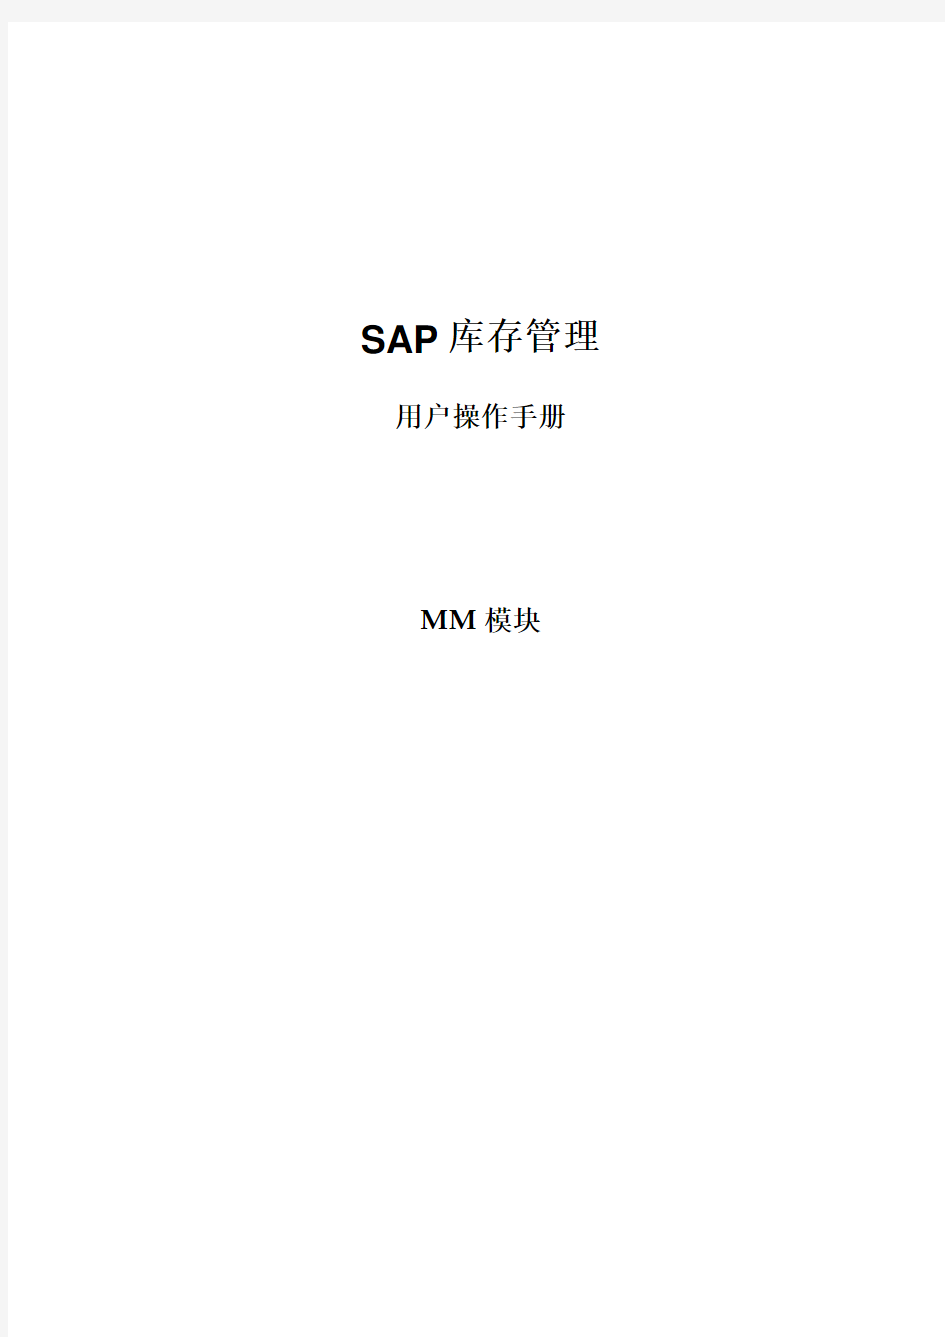 SAP MM模块库存管理操作手册